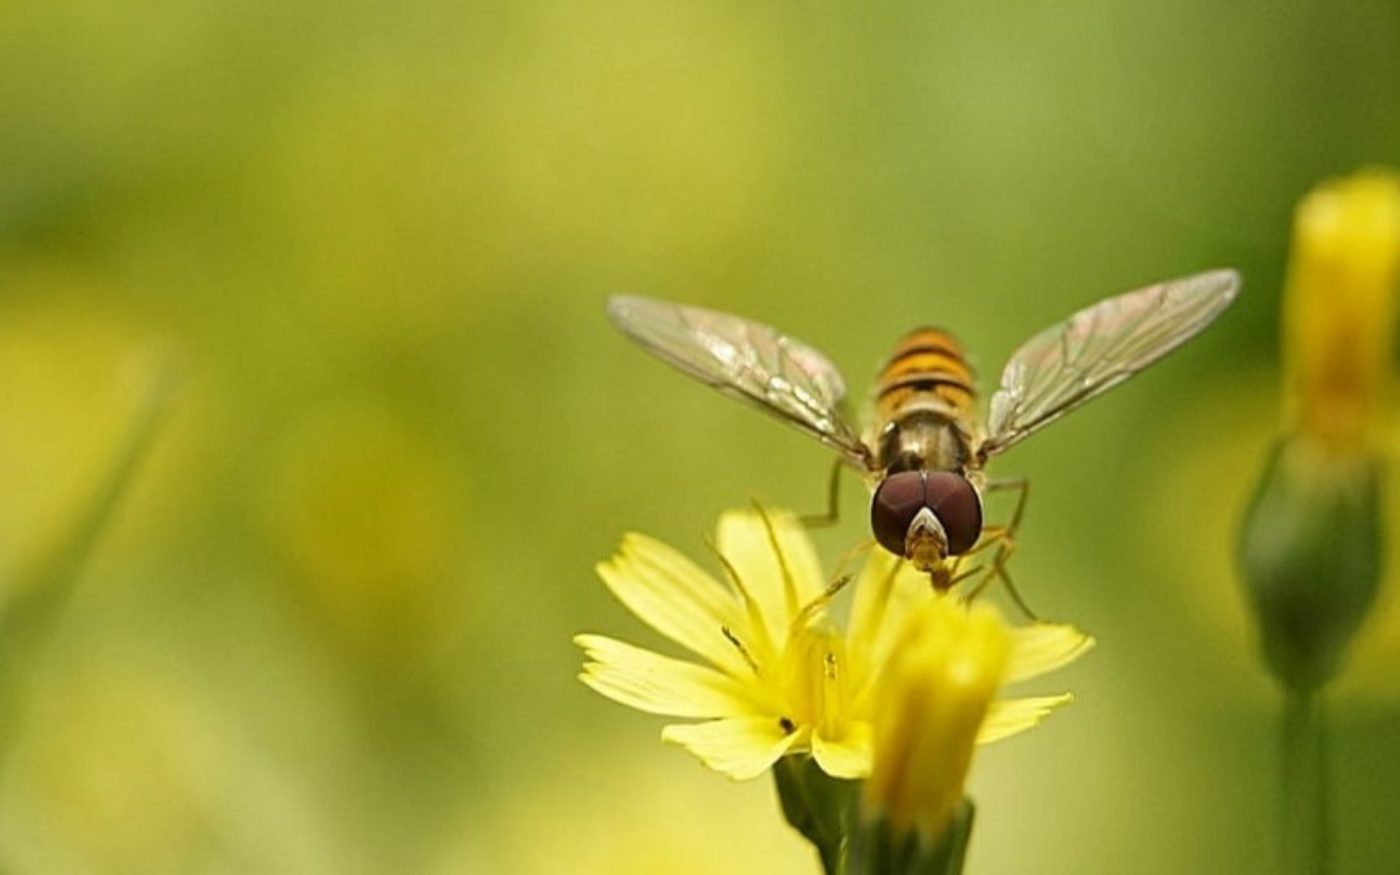 Marmalade hoverfly, Episyrphus balteatus